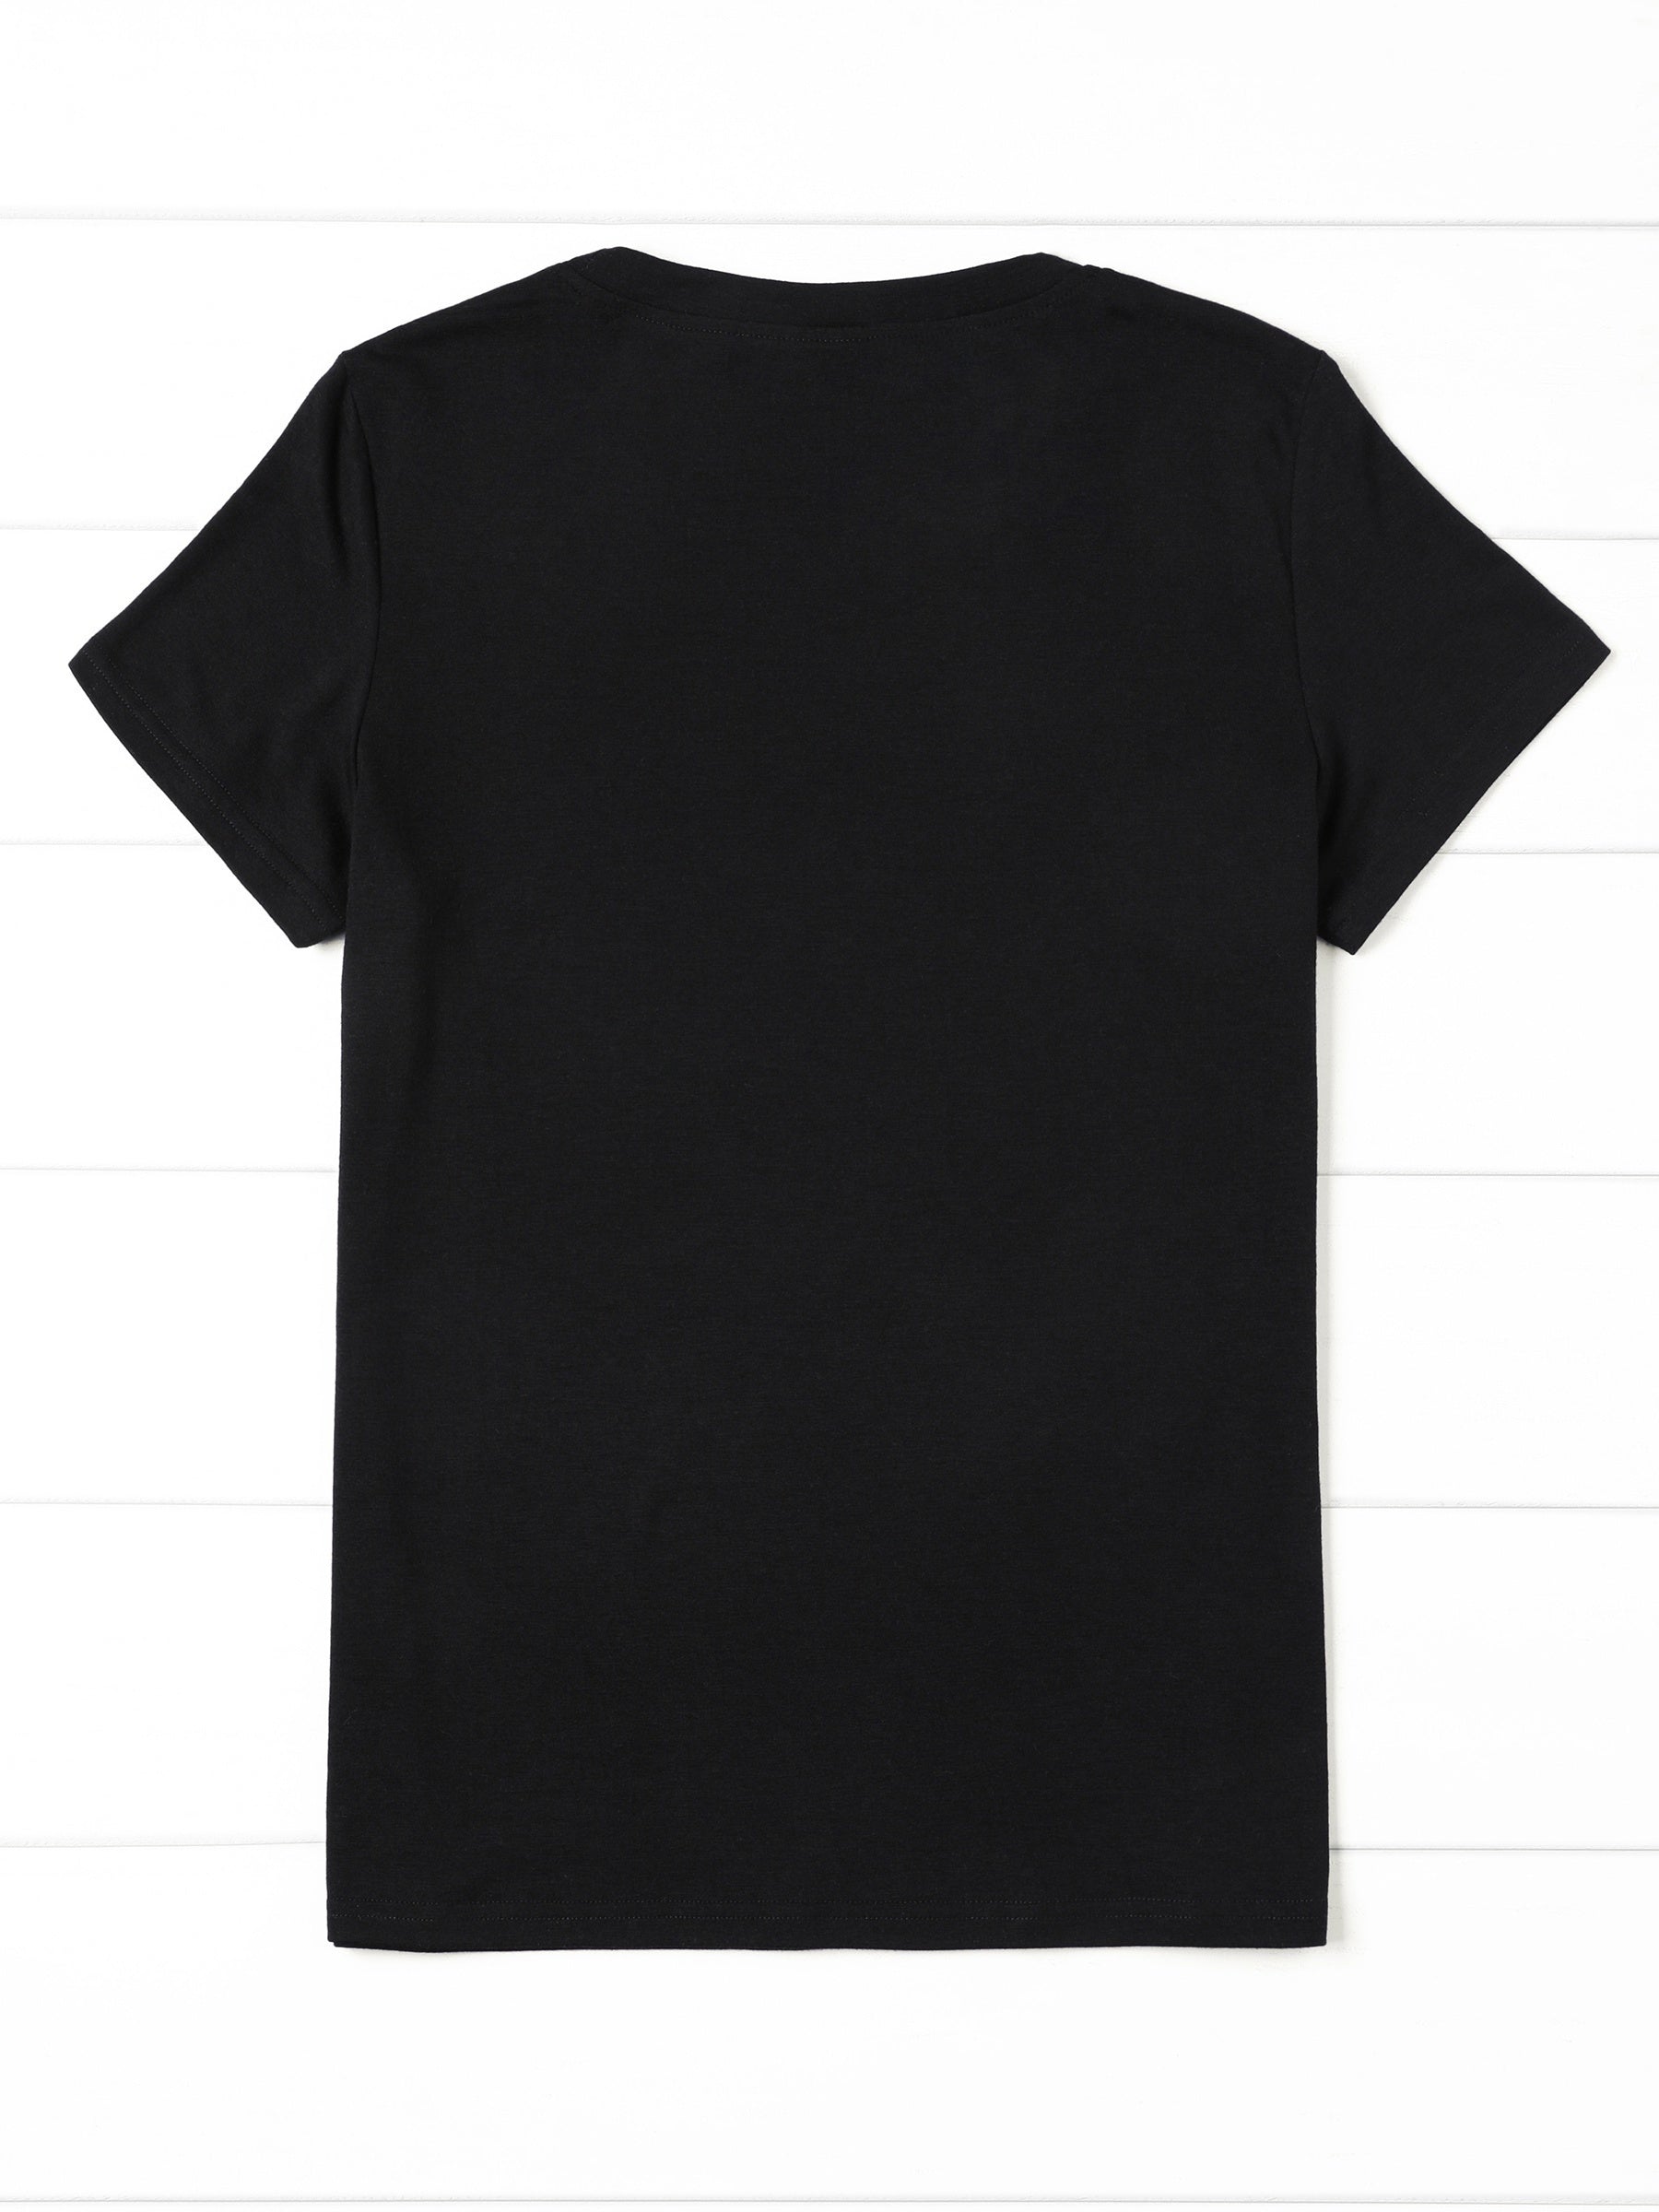 Faith Letter Print T-shirt, Short Sleeve Crew Neck Casual Top For Summer & Spring, Women's Clothing claimedbygoddesigns